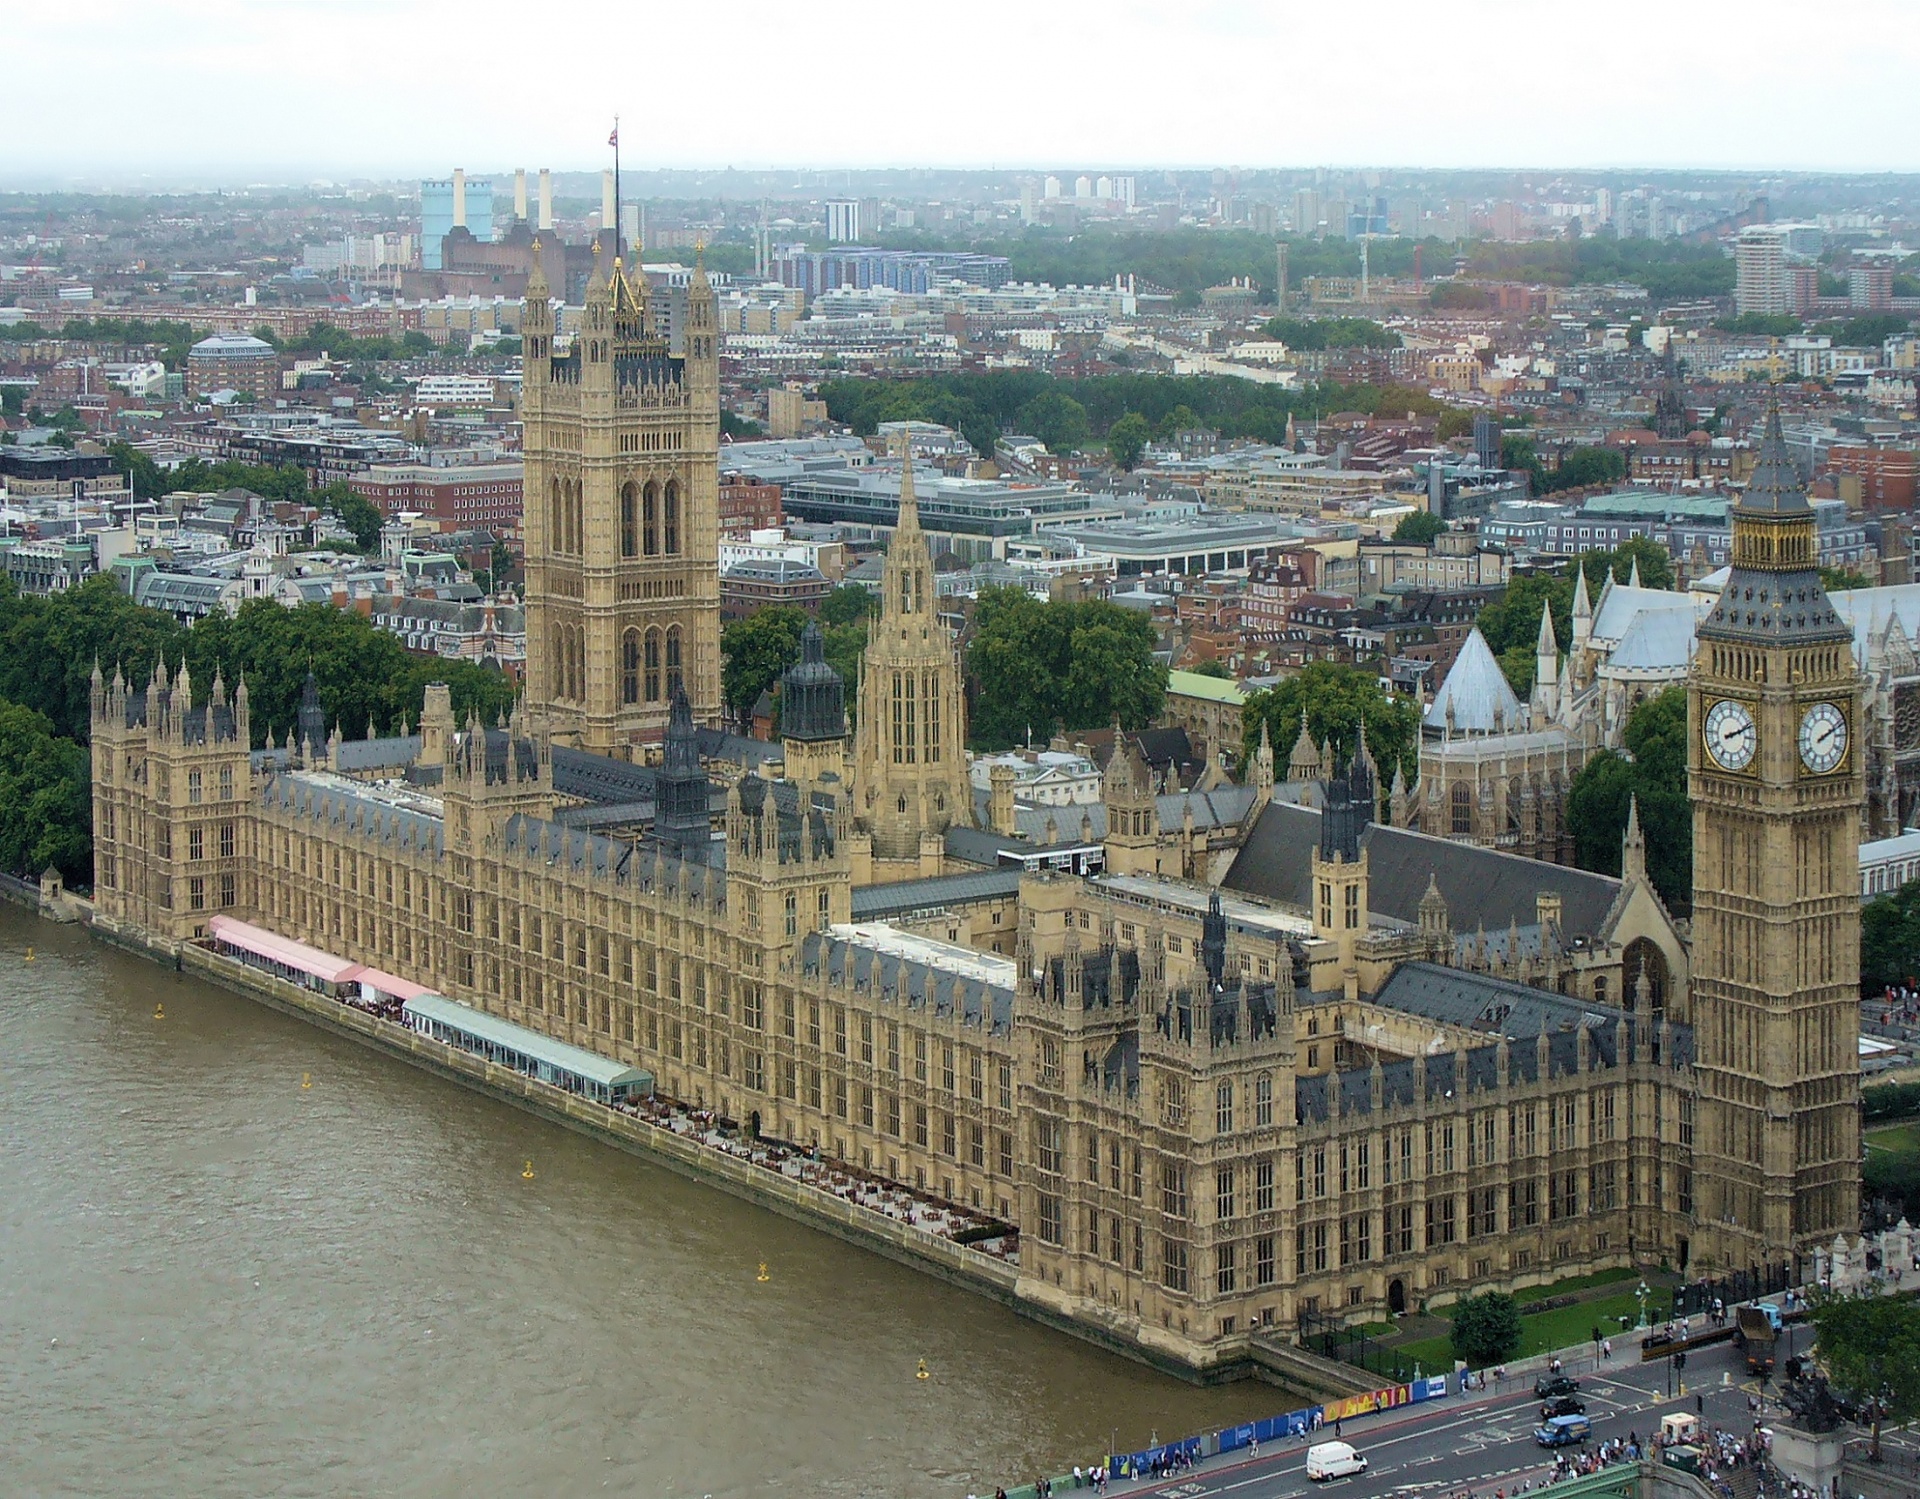 Westminster Palace And Big Ben